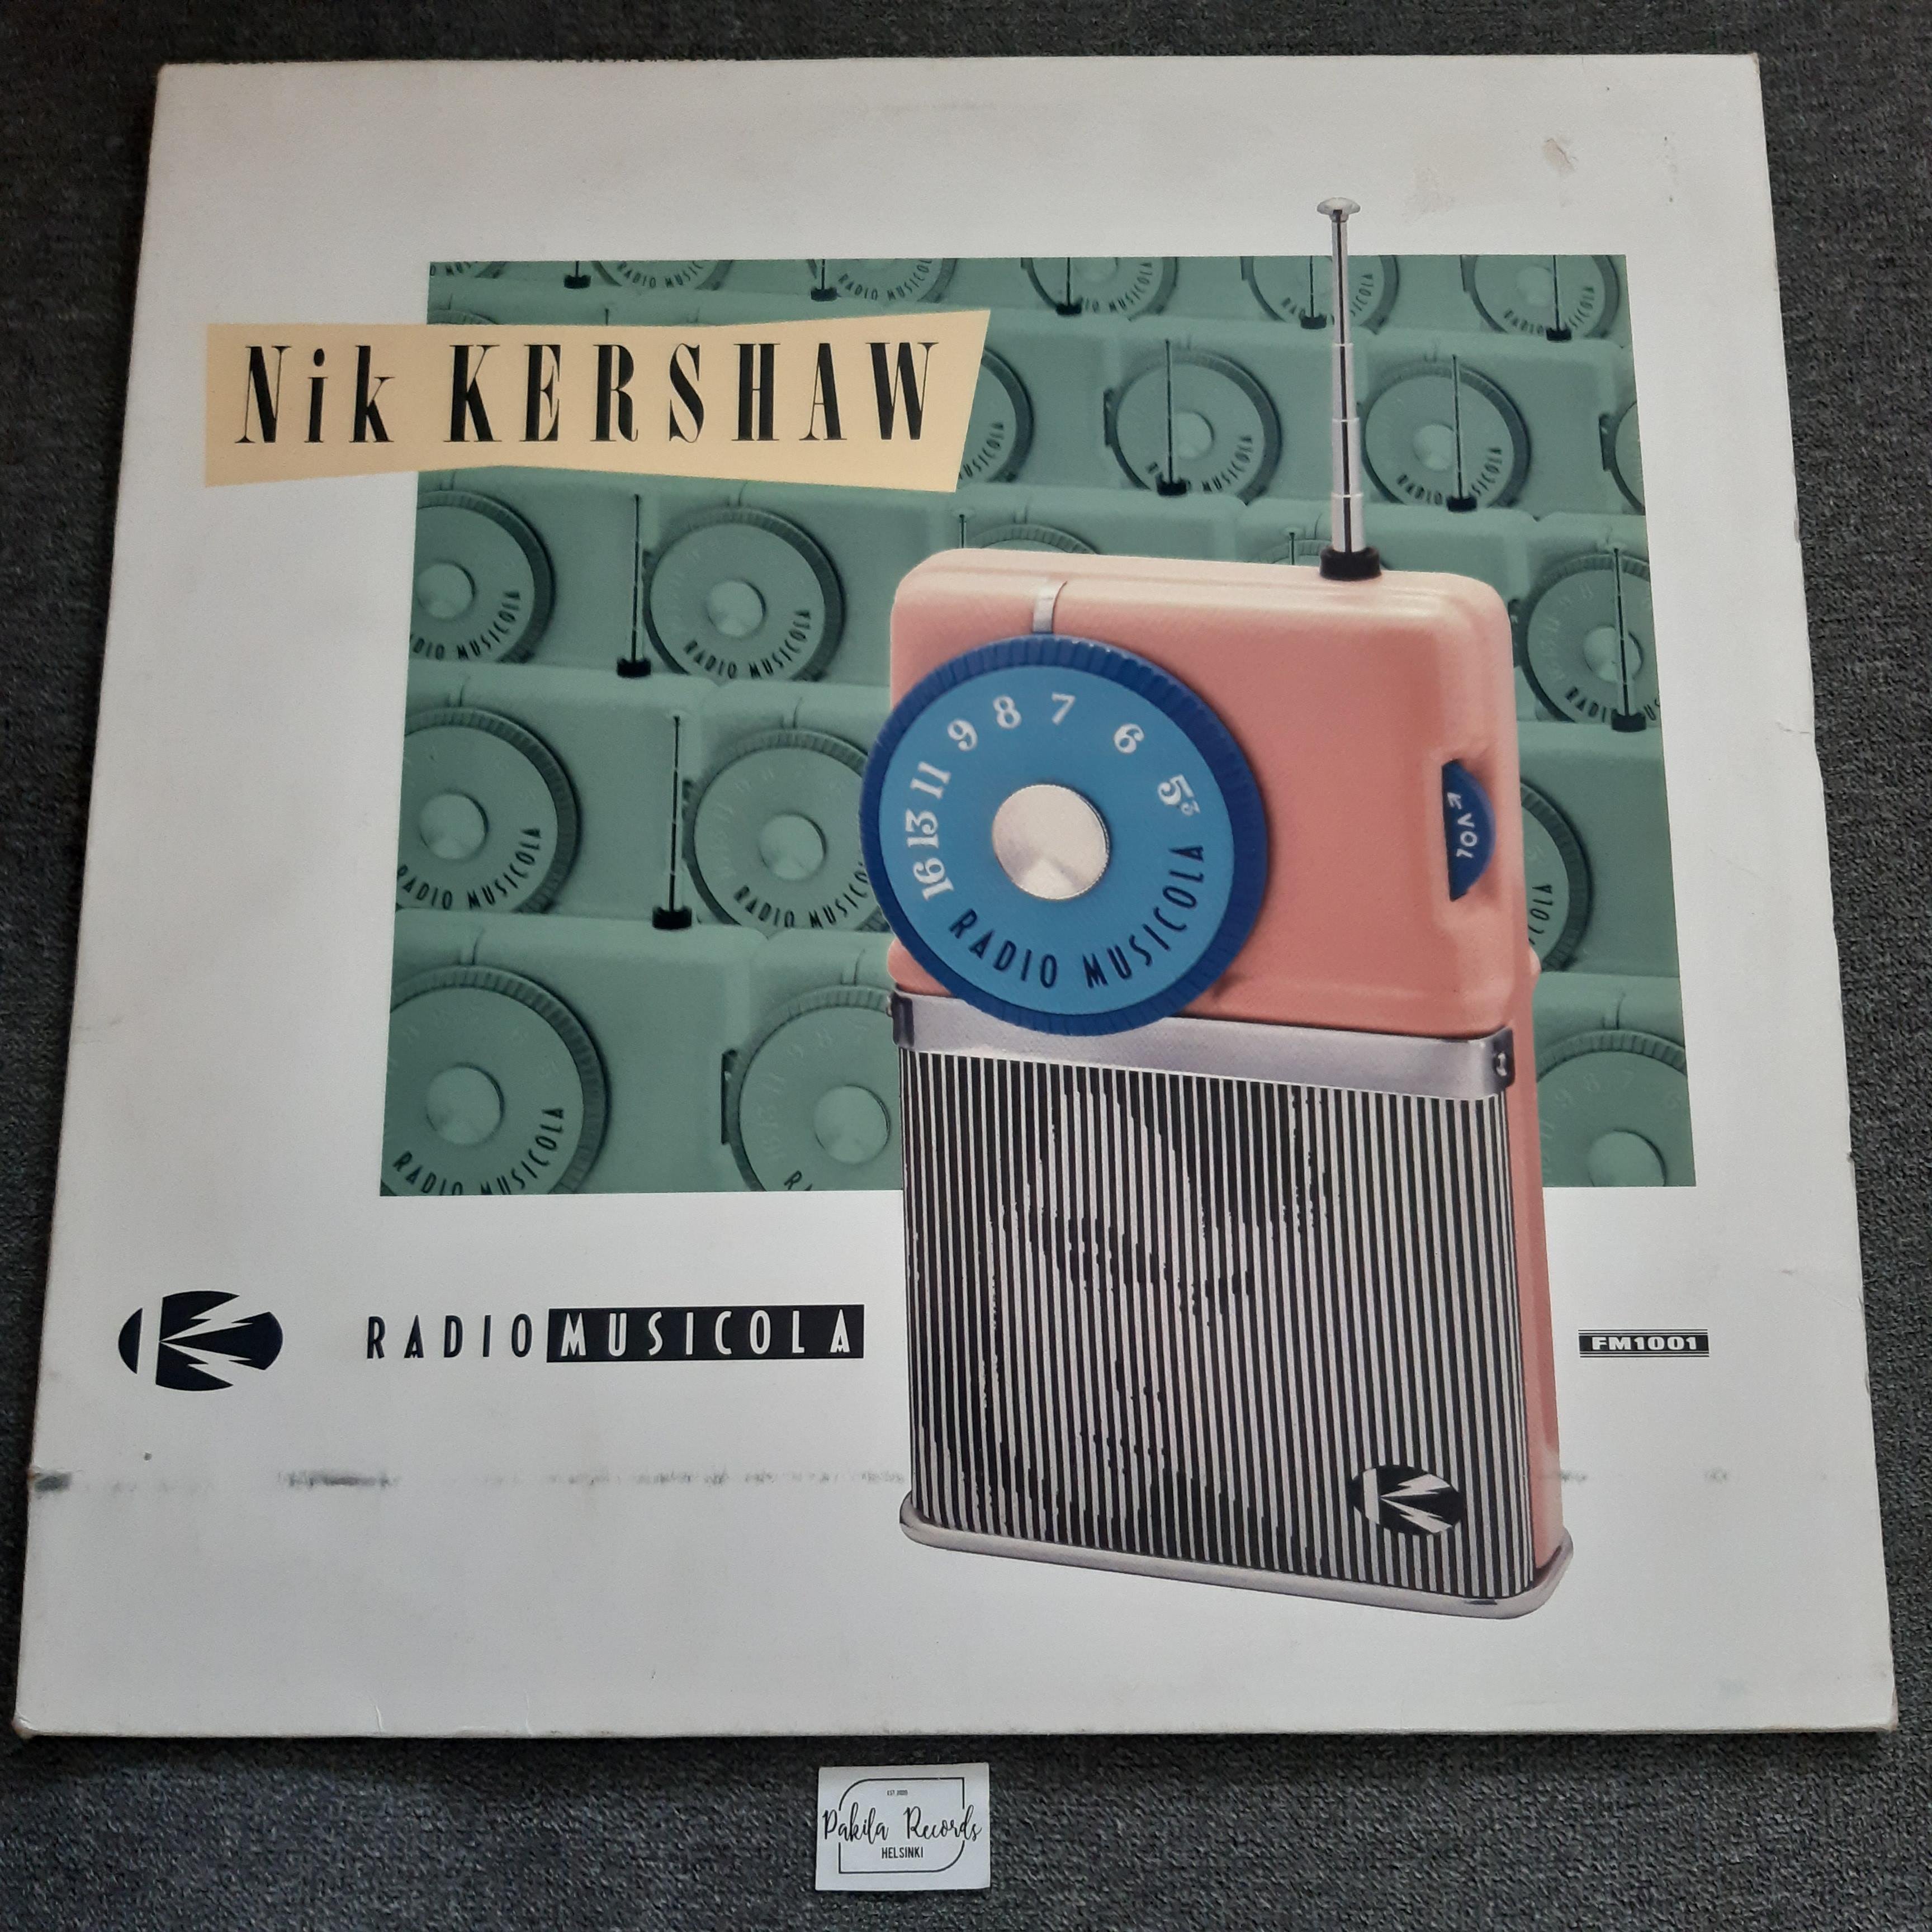 Nik Kershaw - Radio Musicola - LP (käytetty)